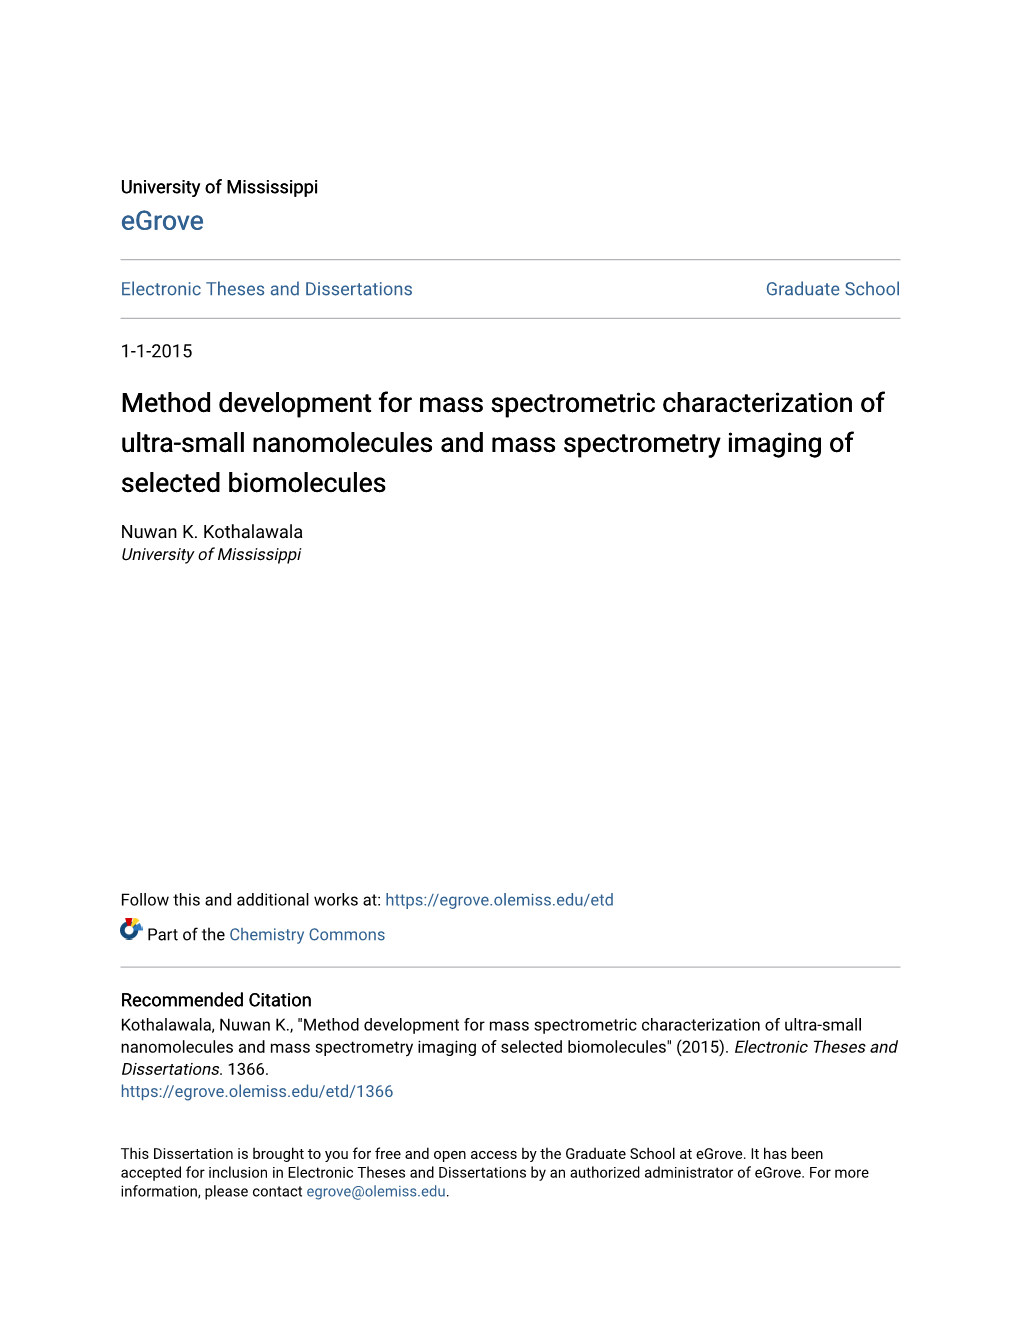 Method Development for Mass Spectrometric Characterization of Ultra-Small Nanomolecules and Mass Spectrometry Imaging of Selected Biomolecules